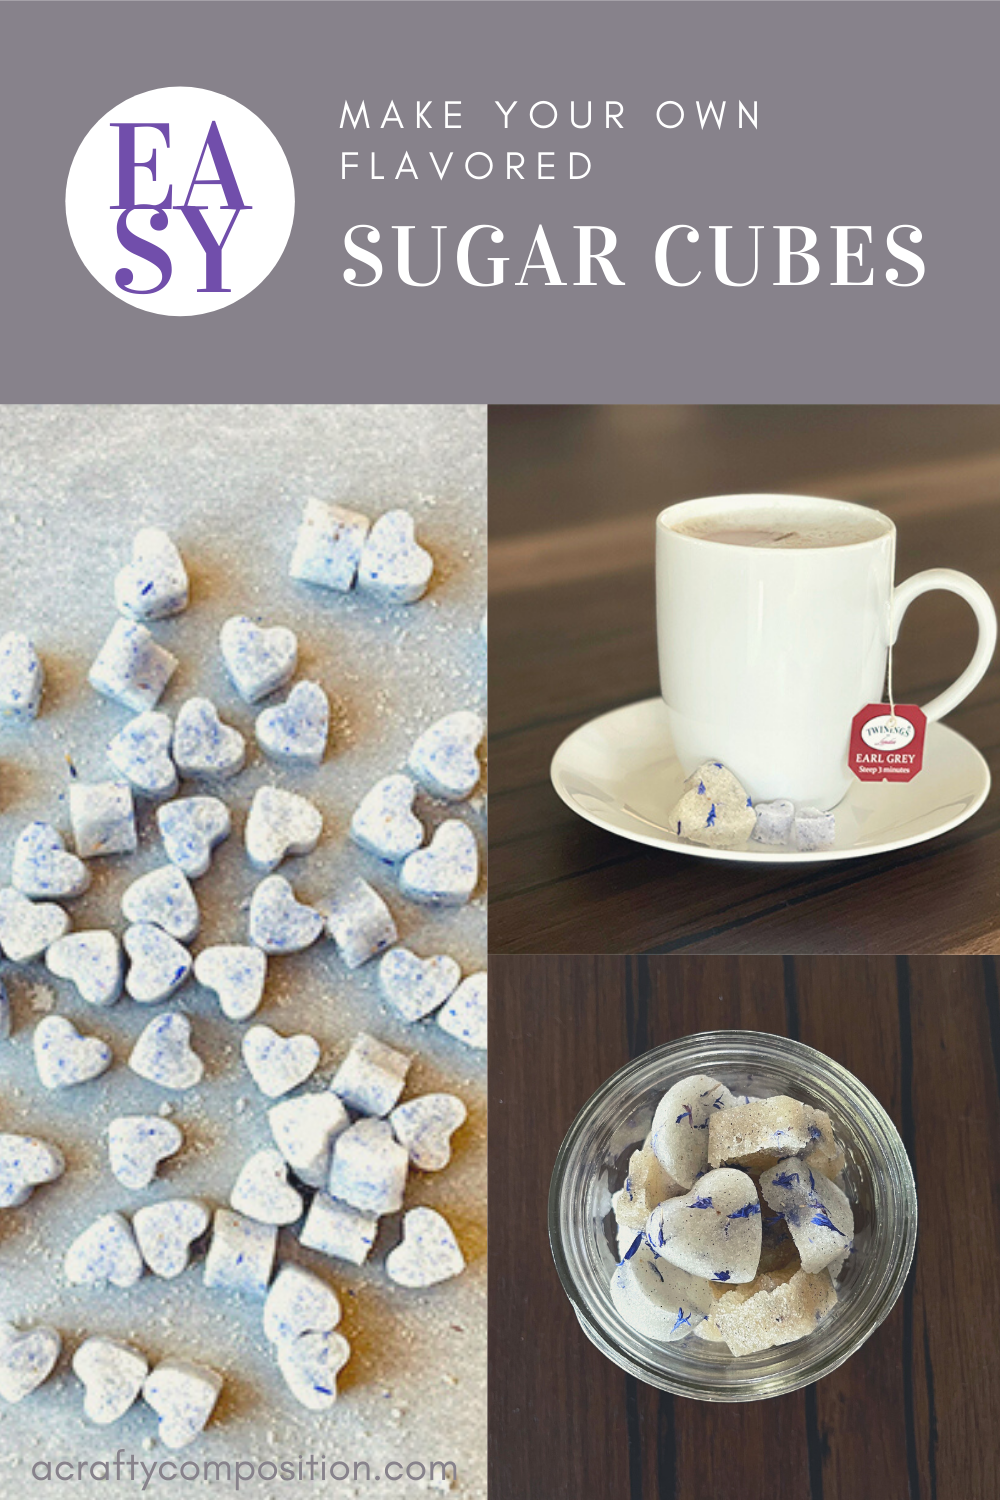 https://acraftycomposition.com/wp-content/uploads/2021/01/Make-your-own-sugar-cubes-pinterest.png